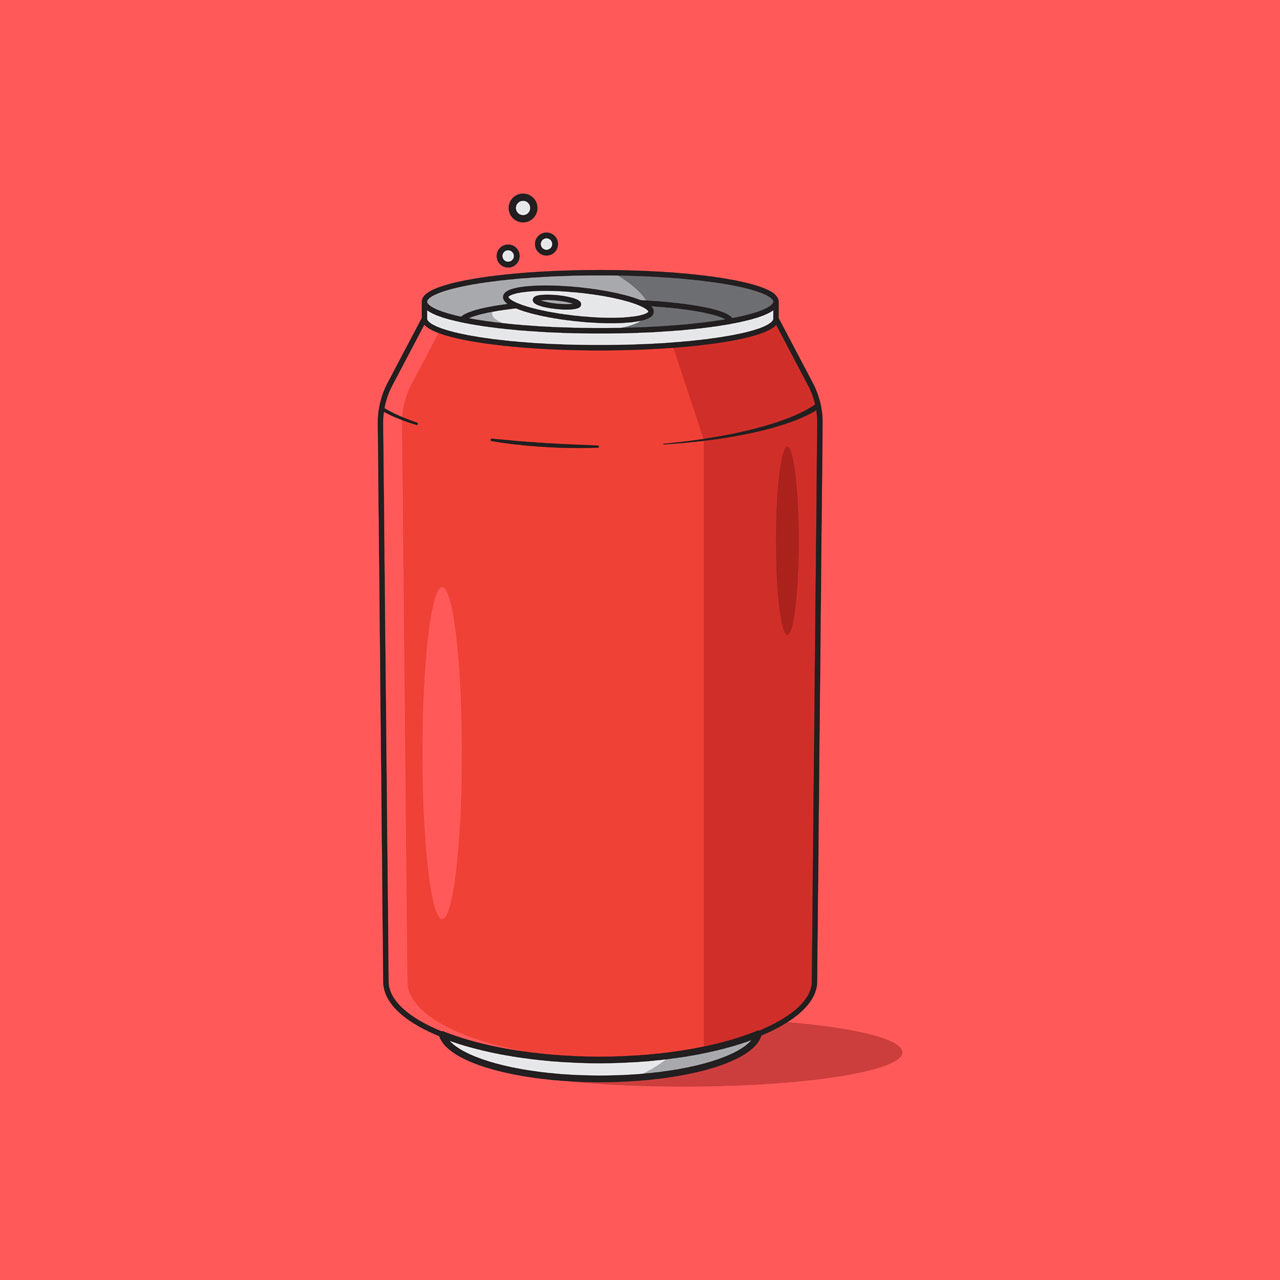 Aluminum red soda can cartoon icon illustration isolated object